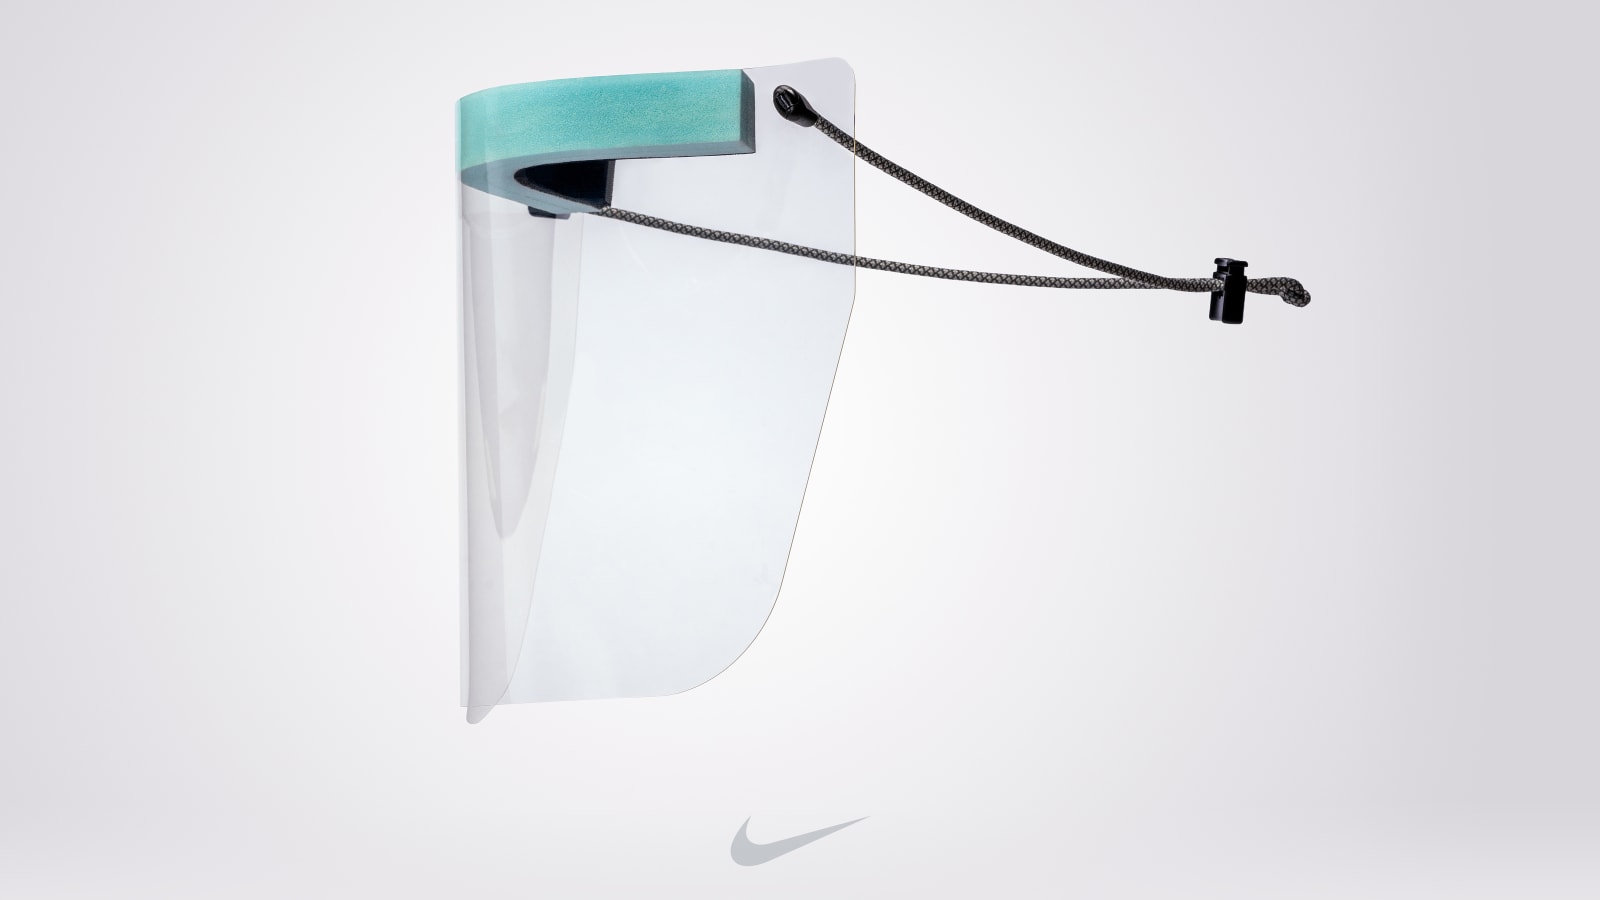 Nike To Combat Coronavirus By Manufacturing Medical Equipment